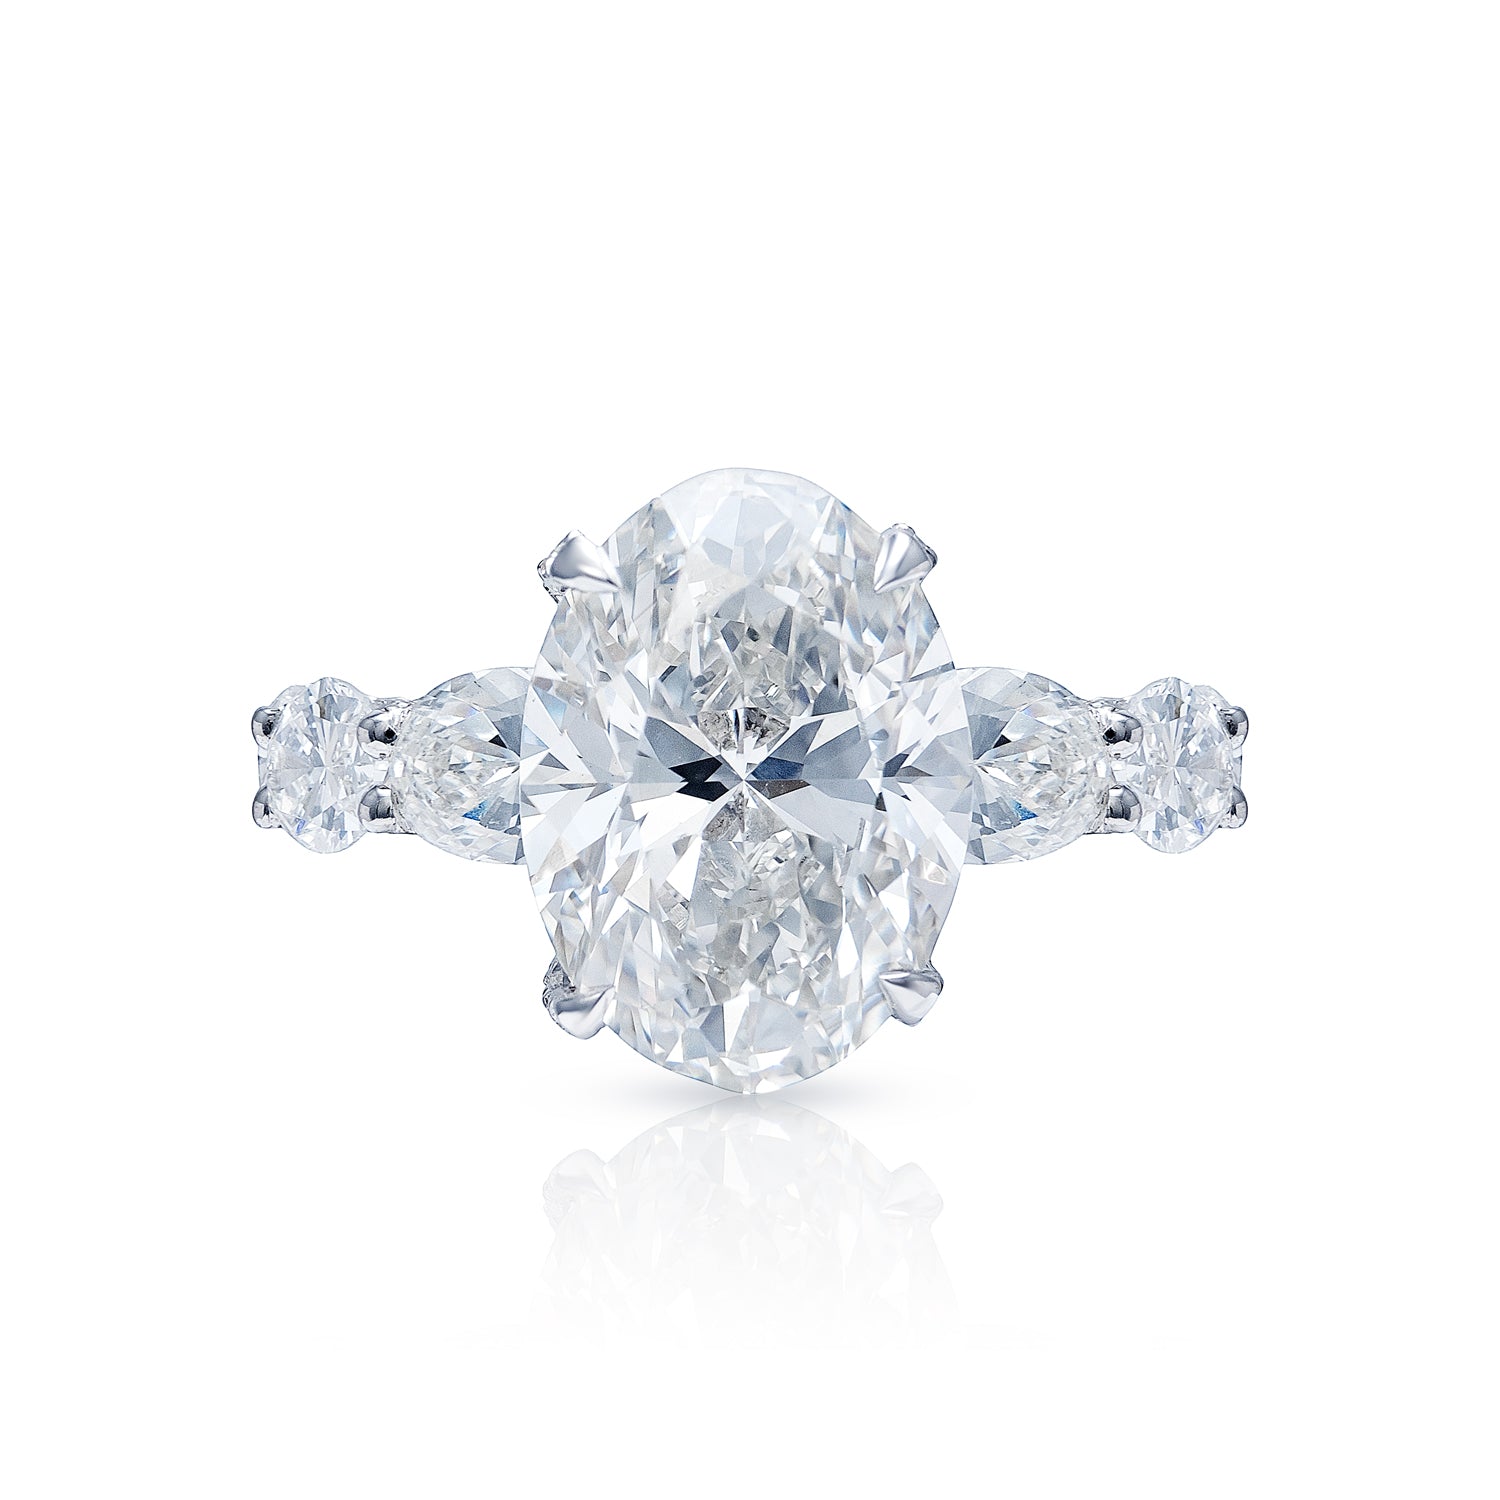 Layton 8 Carat H VS2 Oval Cut Lab Grown Diamond Engagement Ring in 18 Karat White Gold Front View